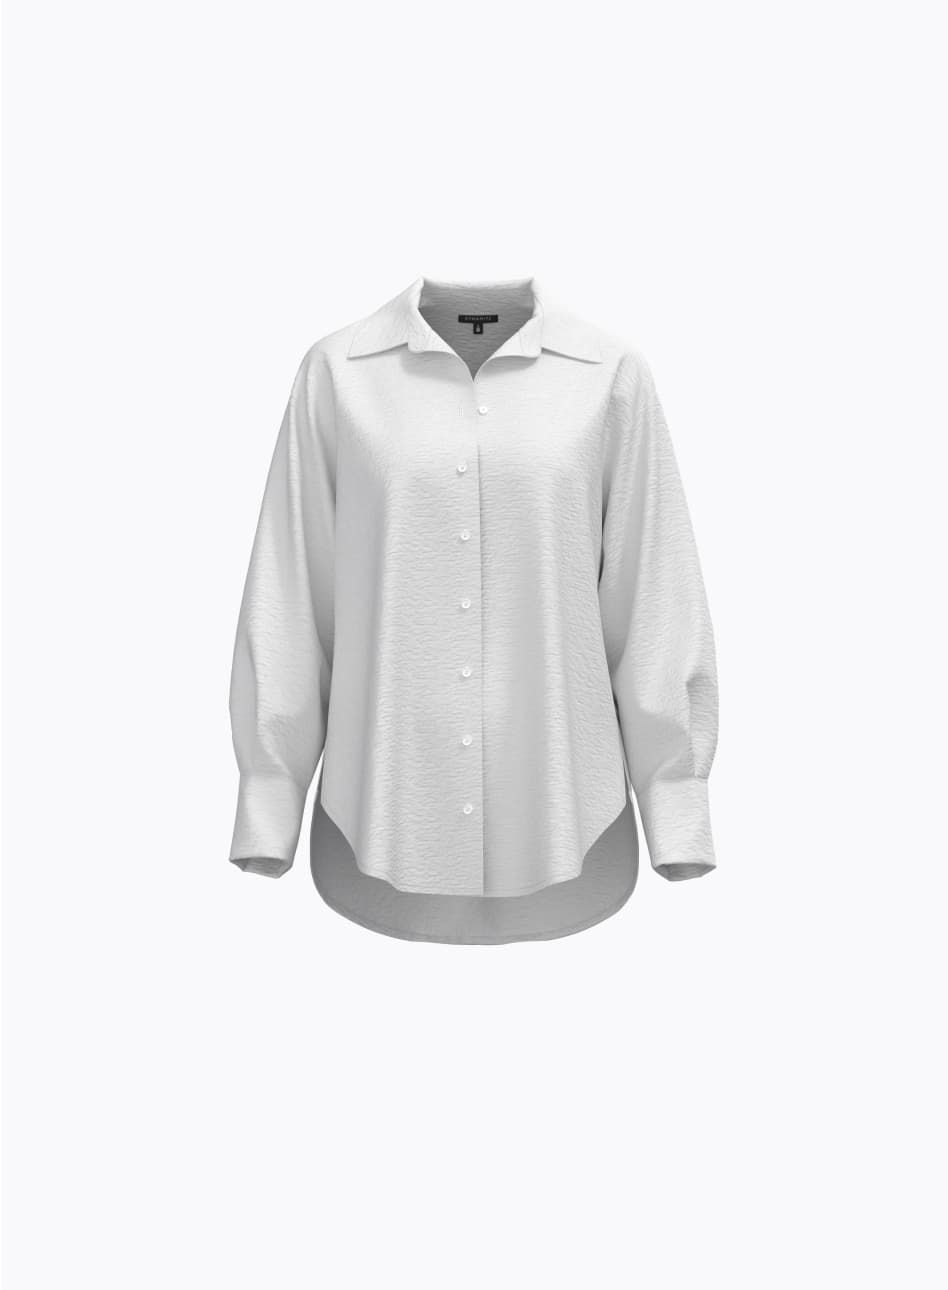 White button up shirt.